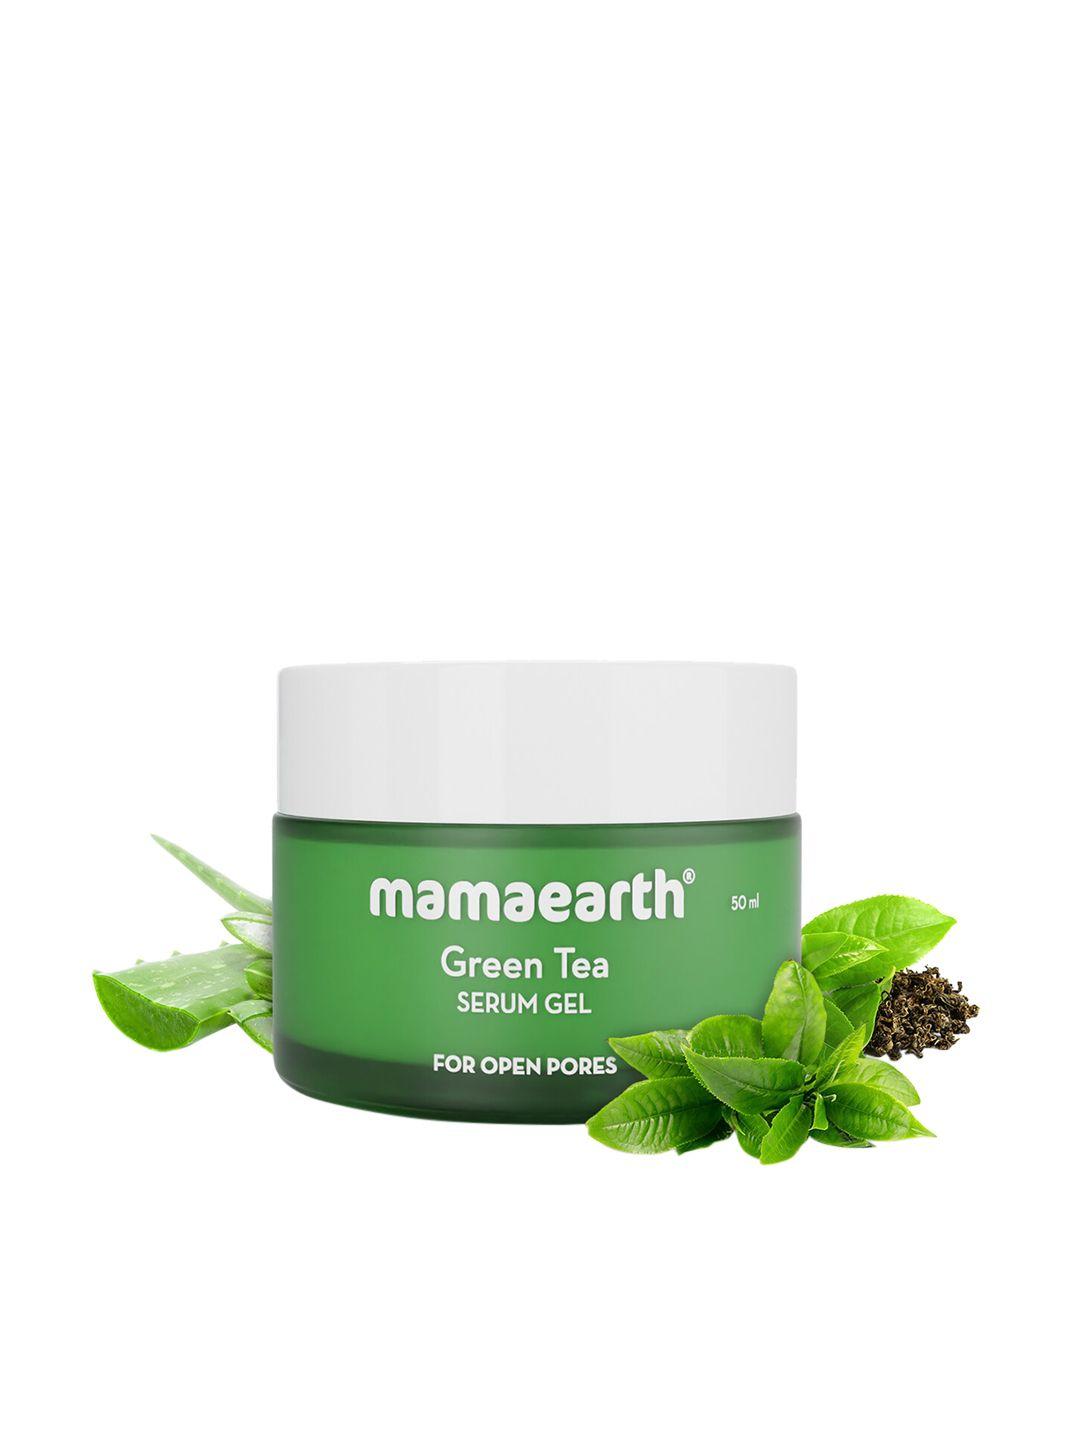 mamaearth green tea serum gel